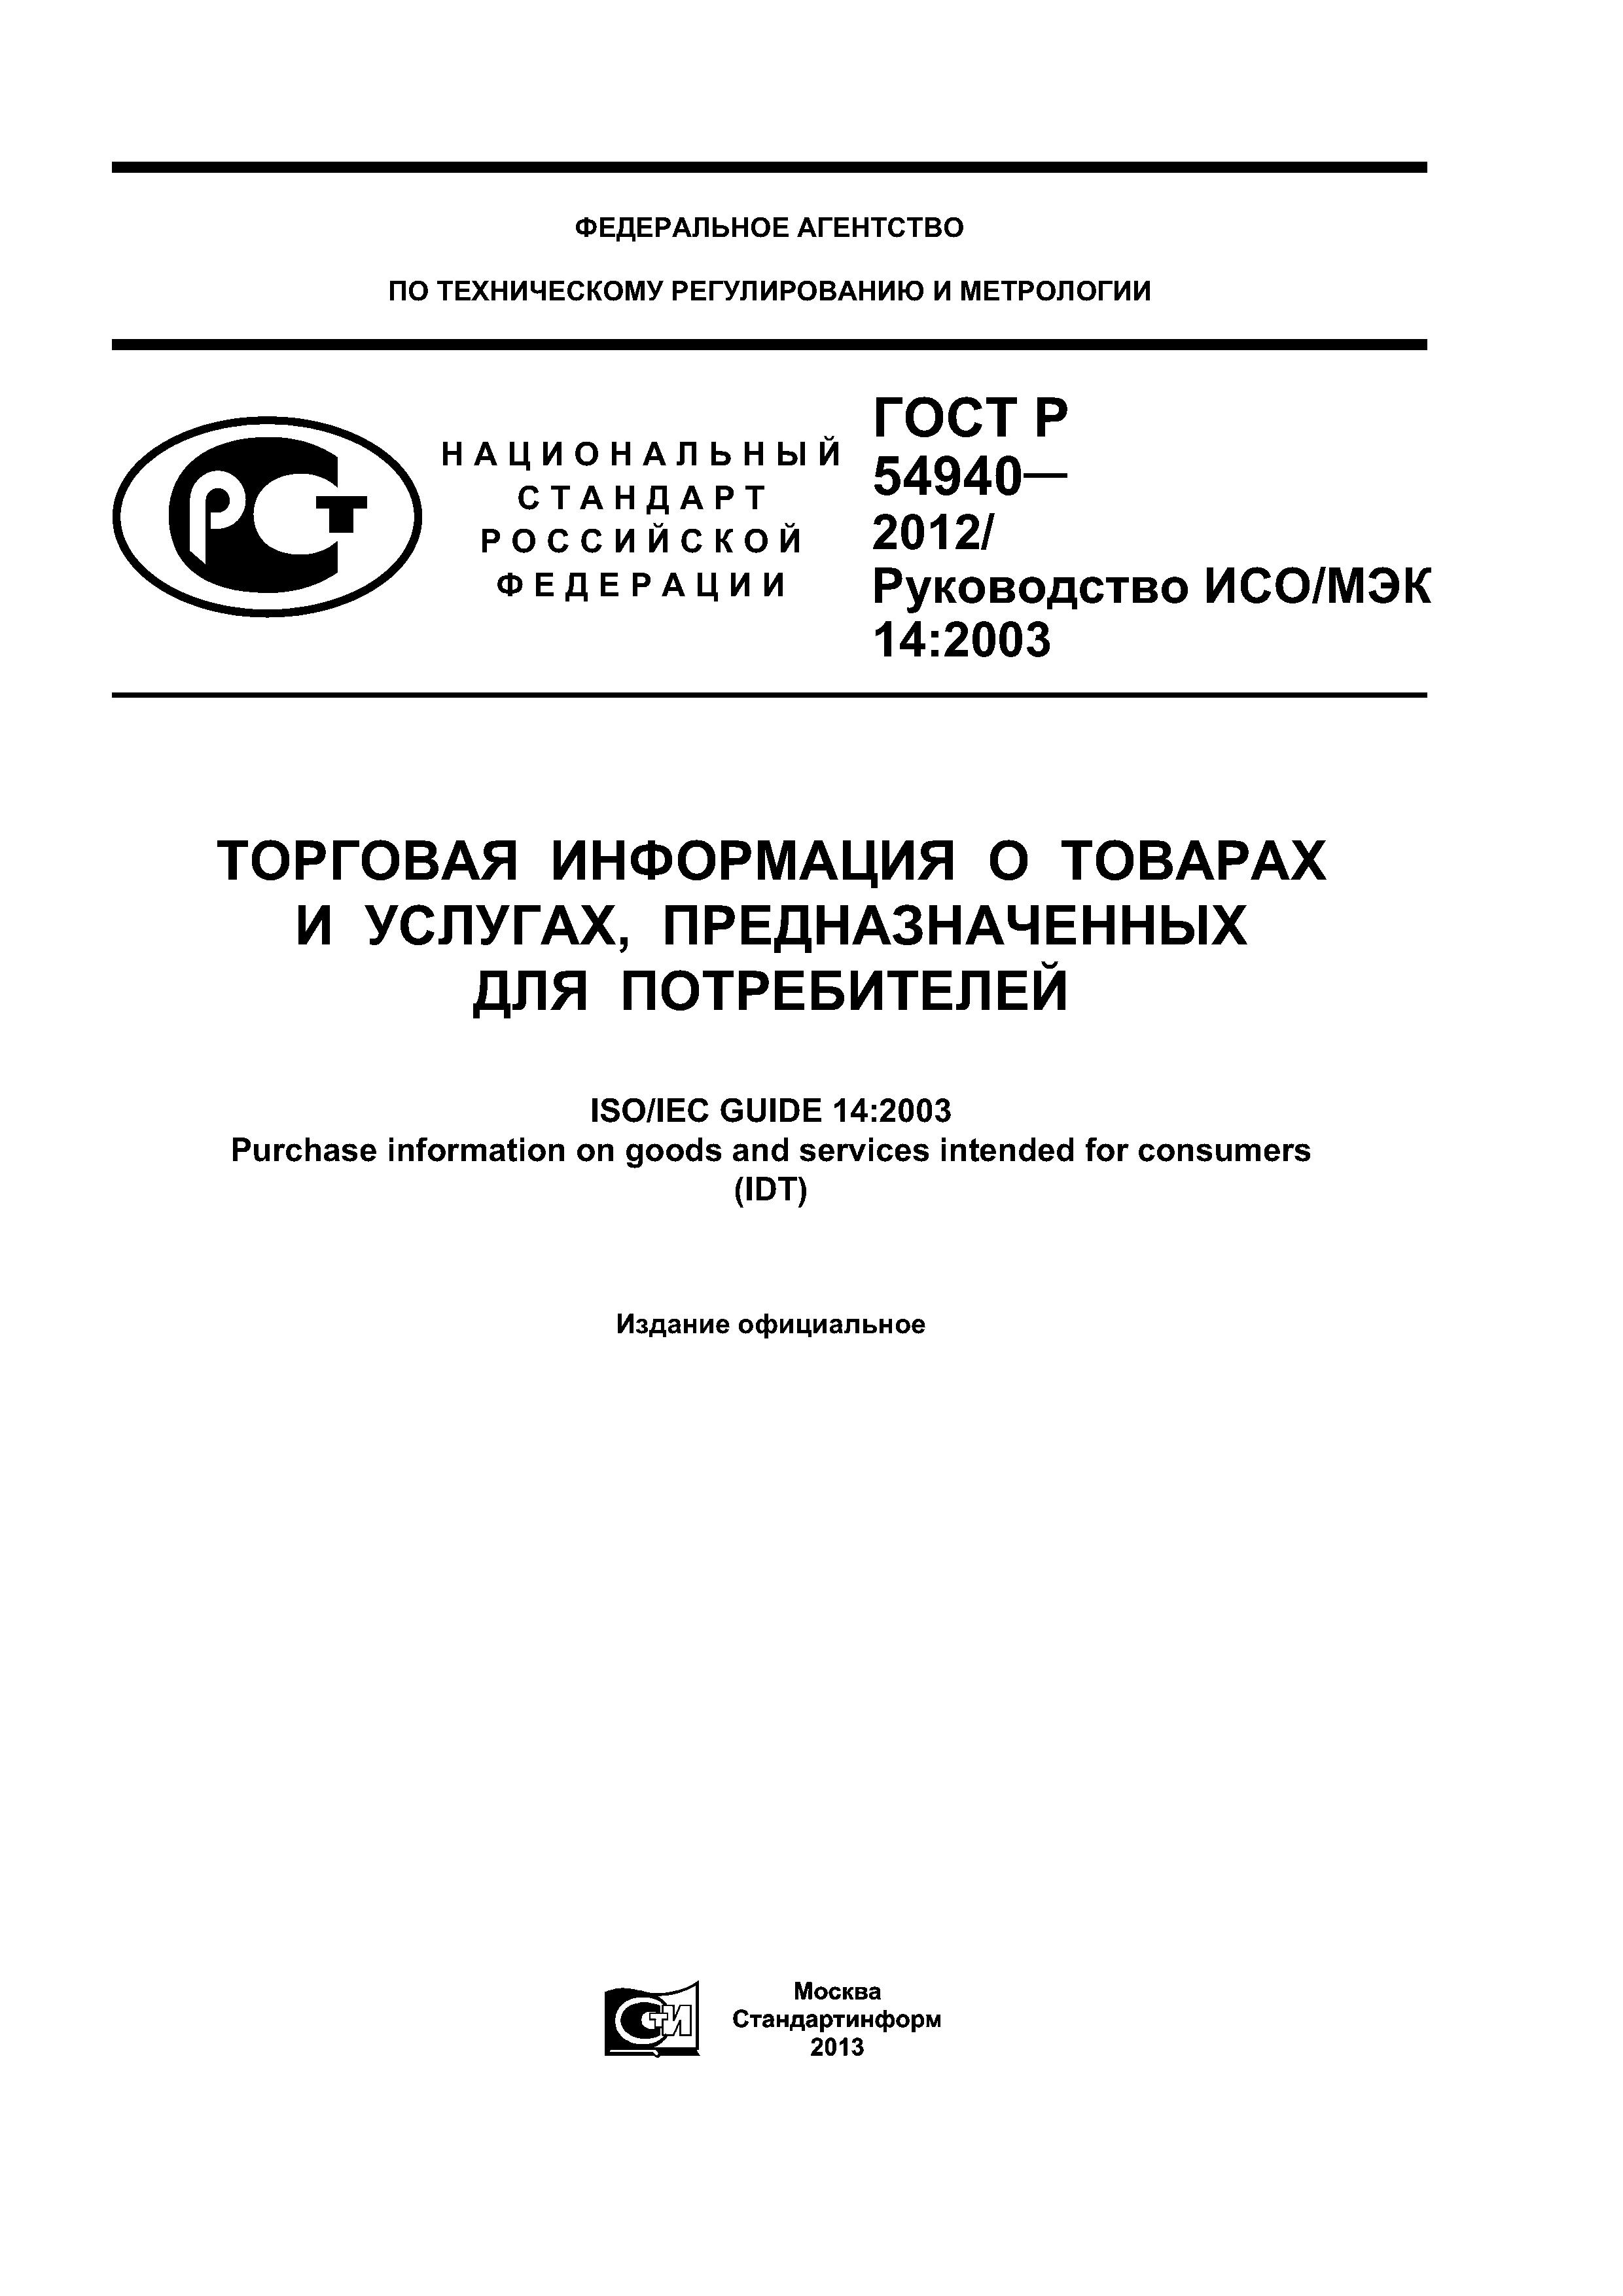 ГОСТ Р 54940-2012